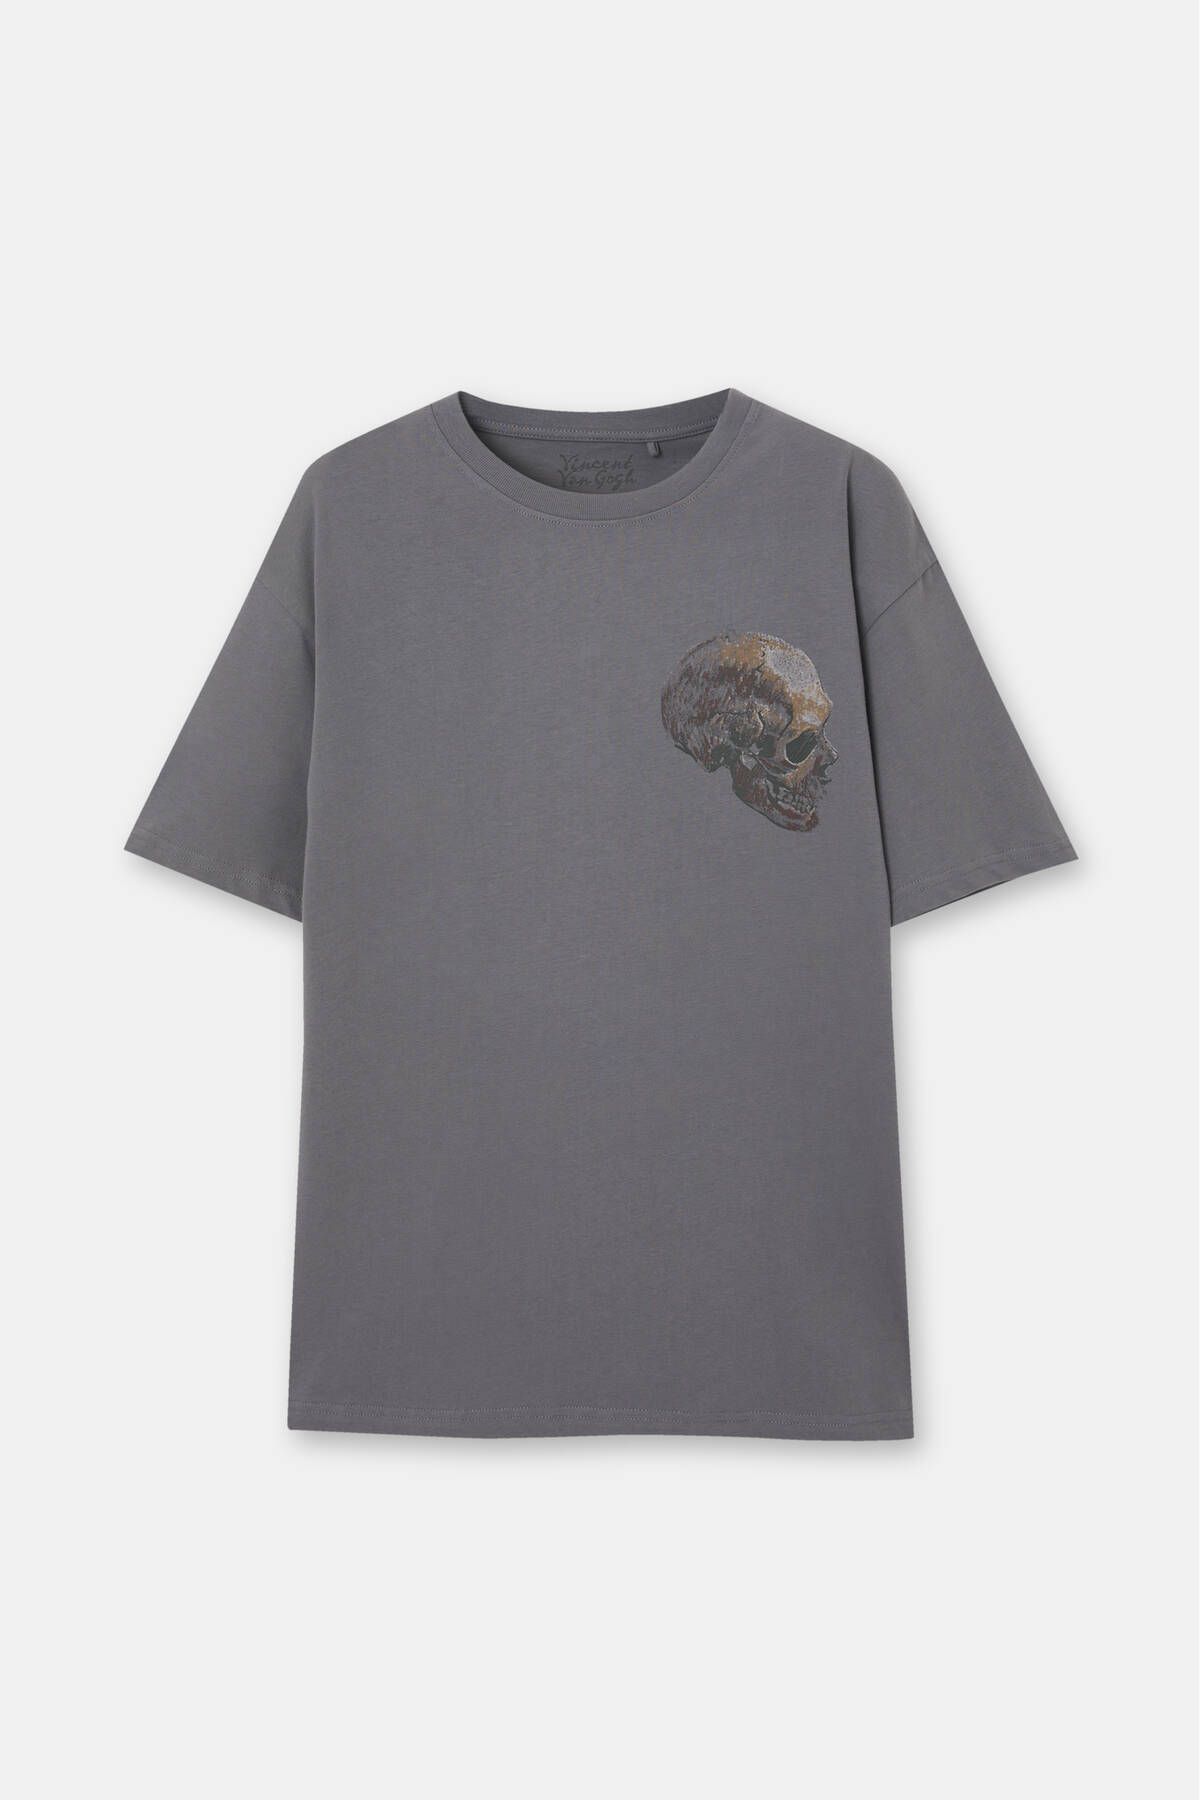 Pull & Bear وینسنت ون گوگ تی شرت خاکستری چاپ شده